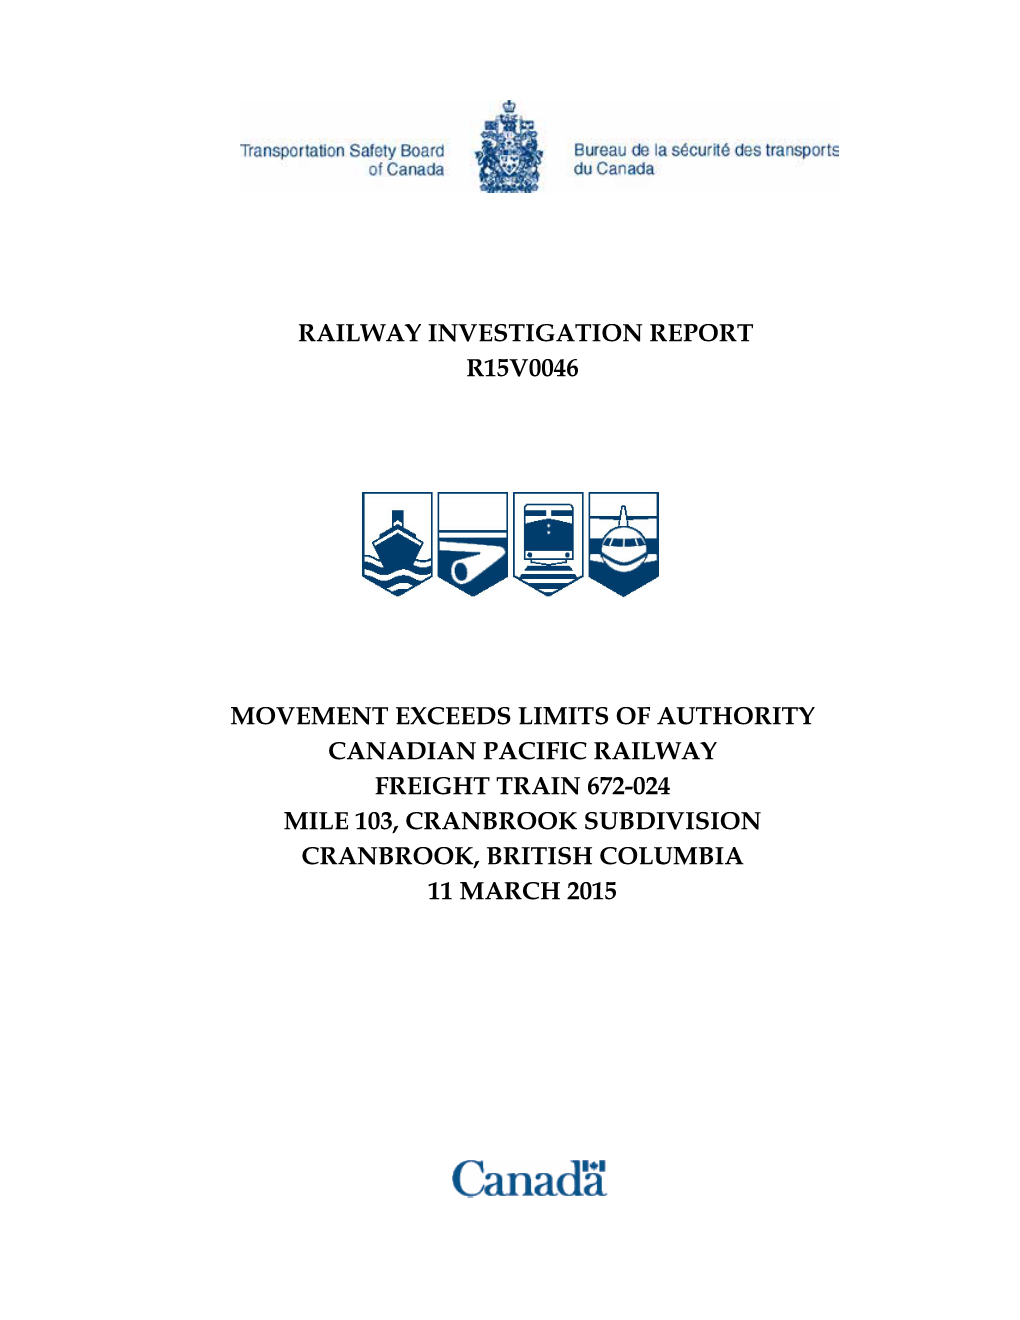 Railway Investigation Report R15v0046